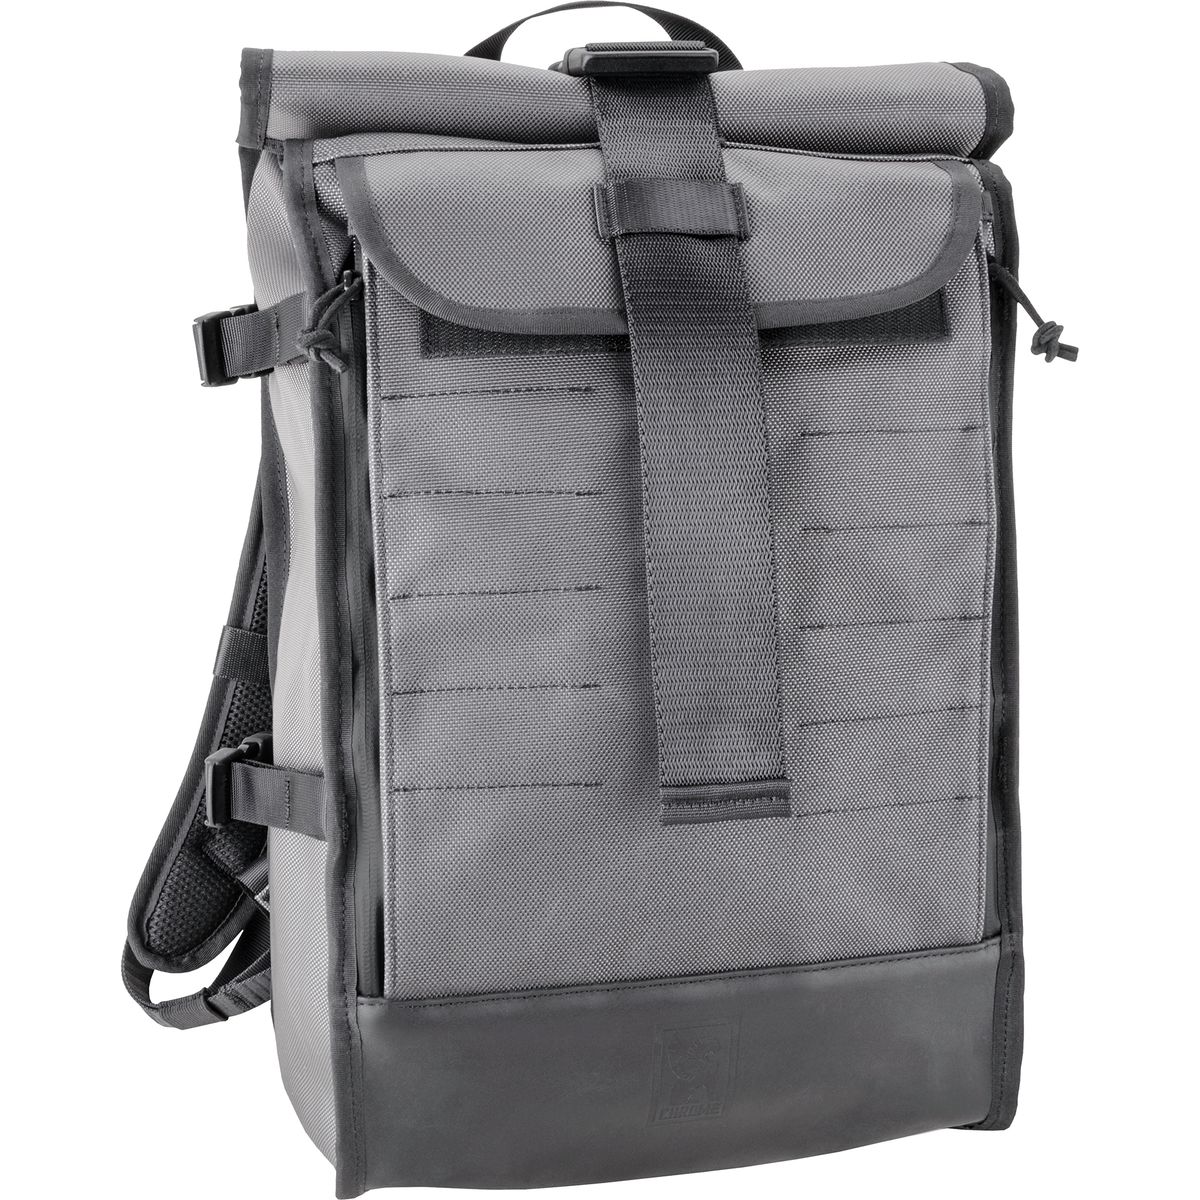 Chrome Moto Barrage Backpack 1342 2074cu in